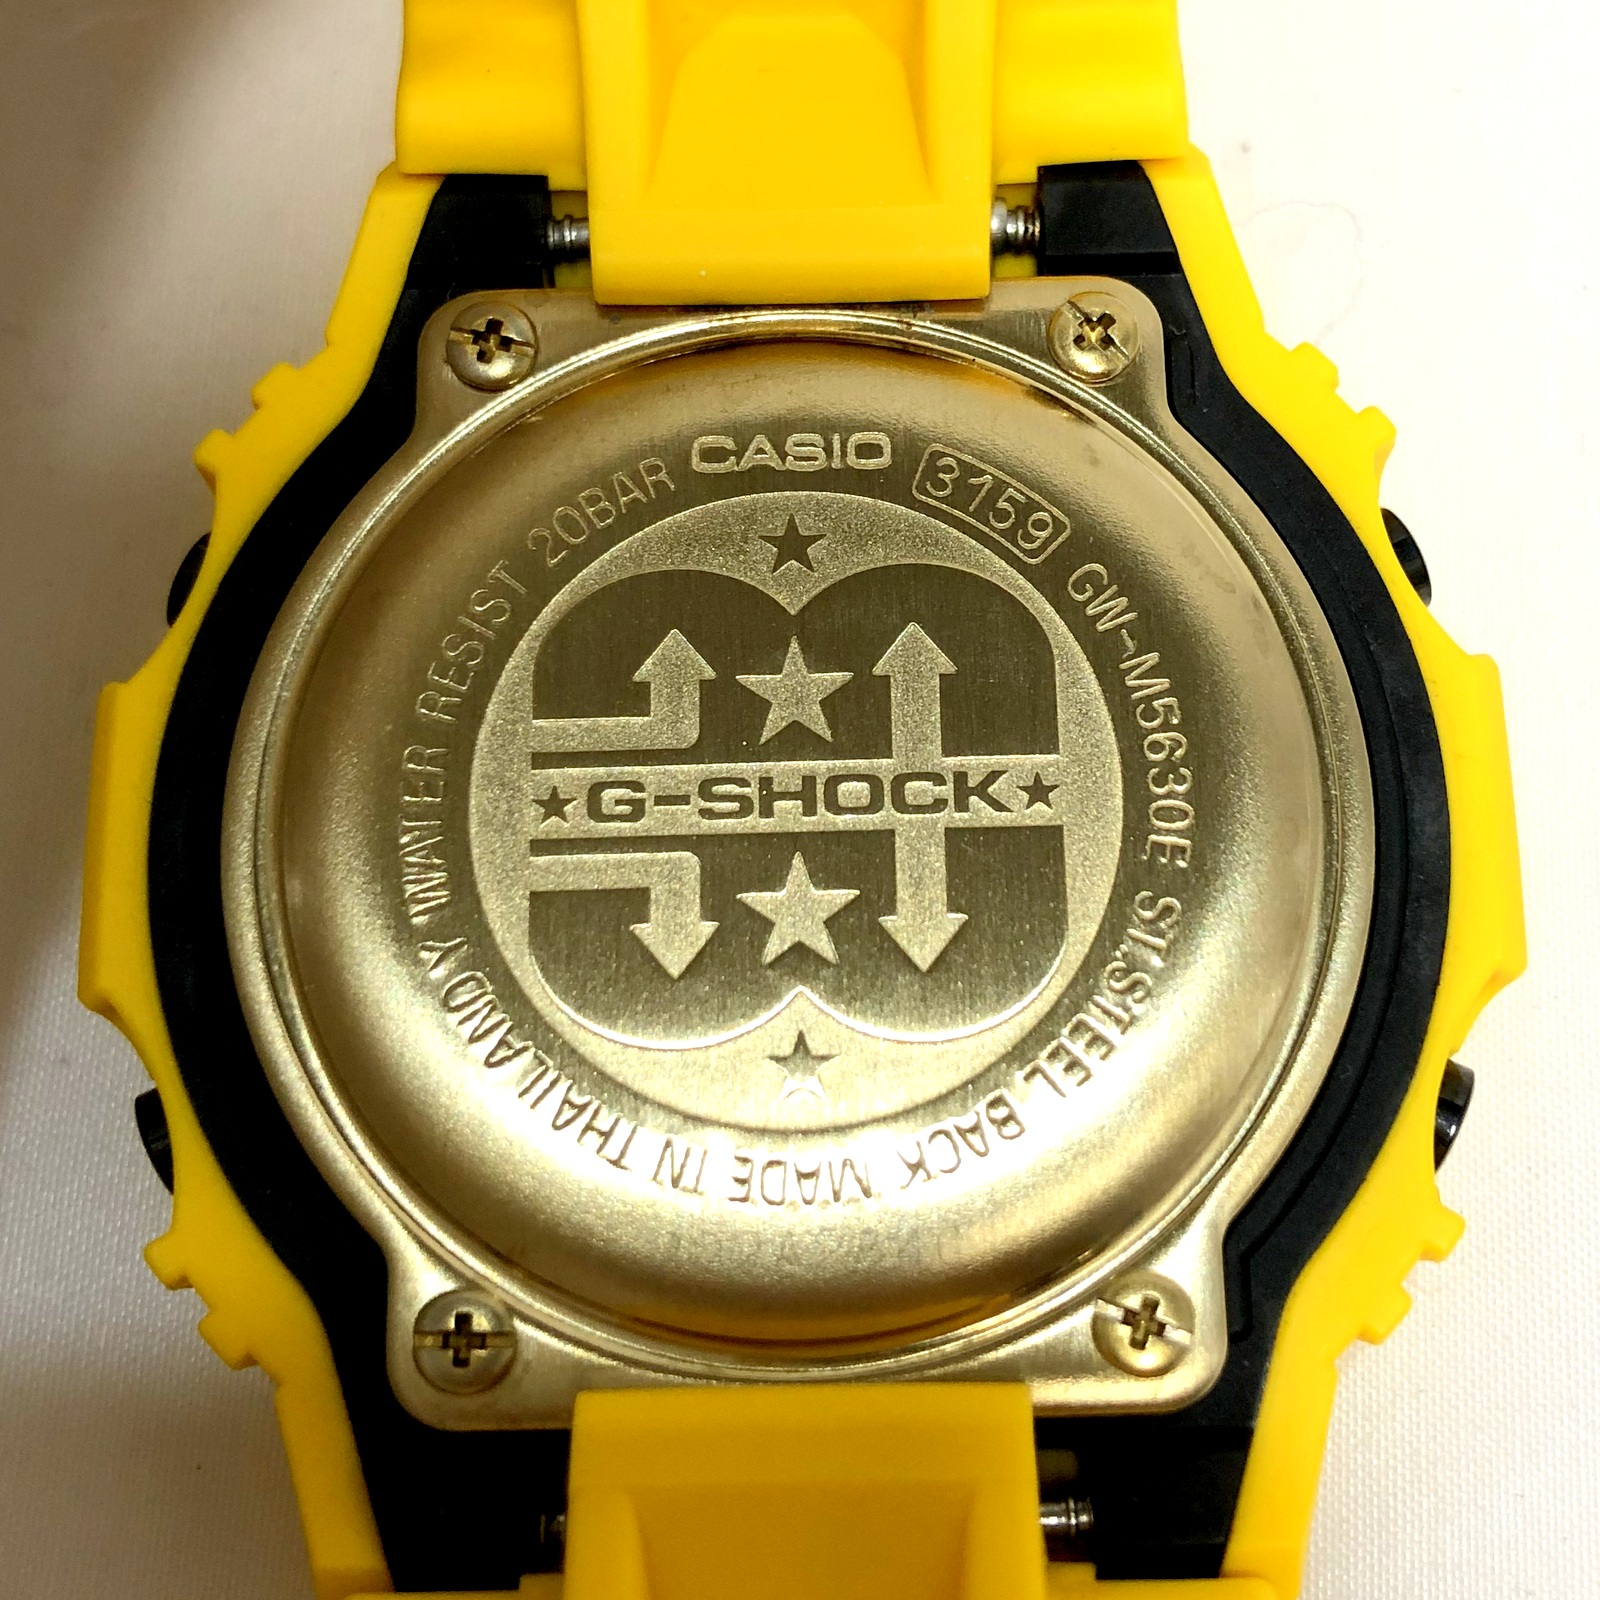 G-SHOCK G-SHOCK CASIO Casio Watch GW-M5630E-9JR 30th Anniversary